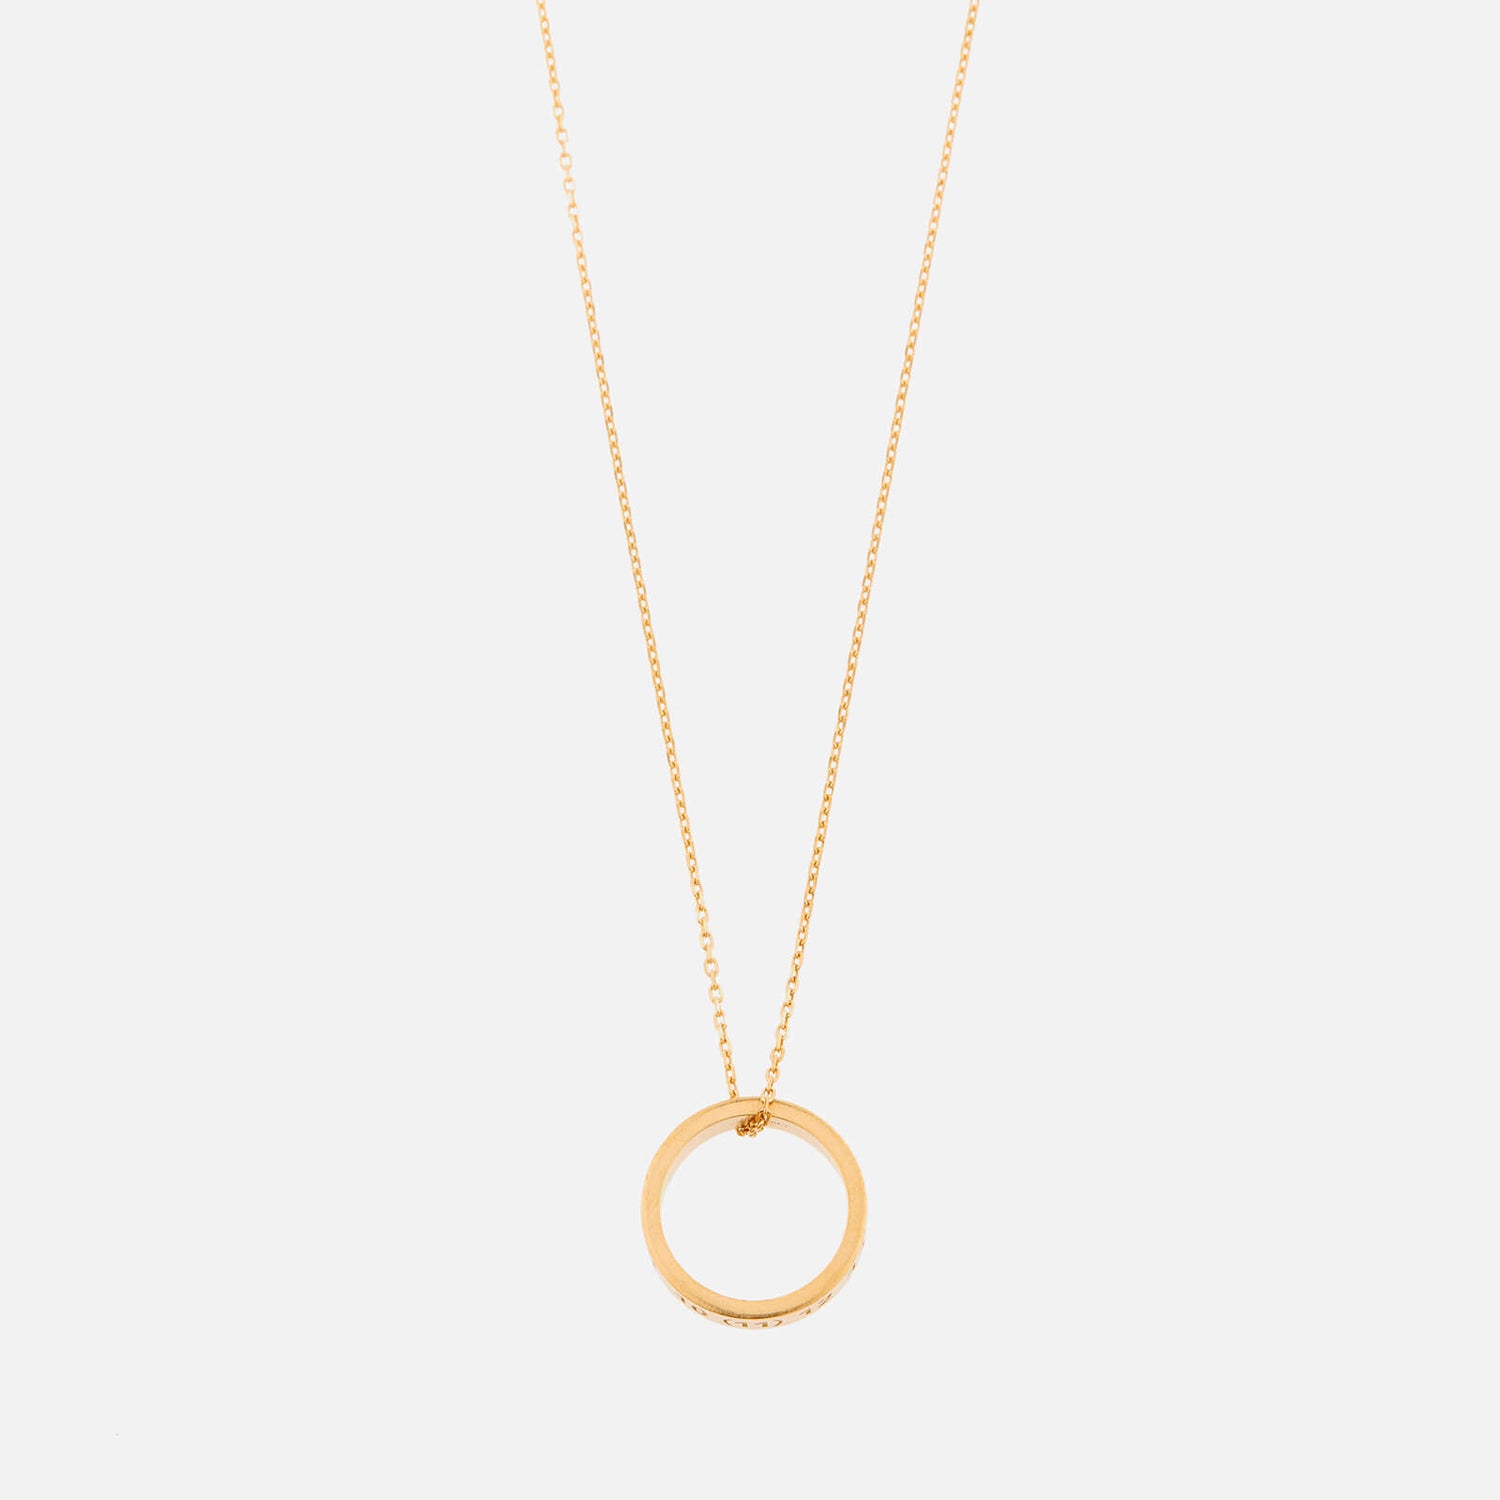 Maison Margiela Men's Ring Necklace - Yellow Gold Plating - 6